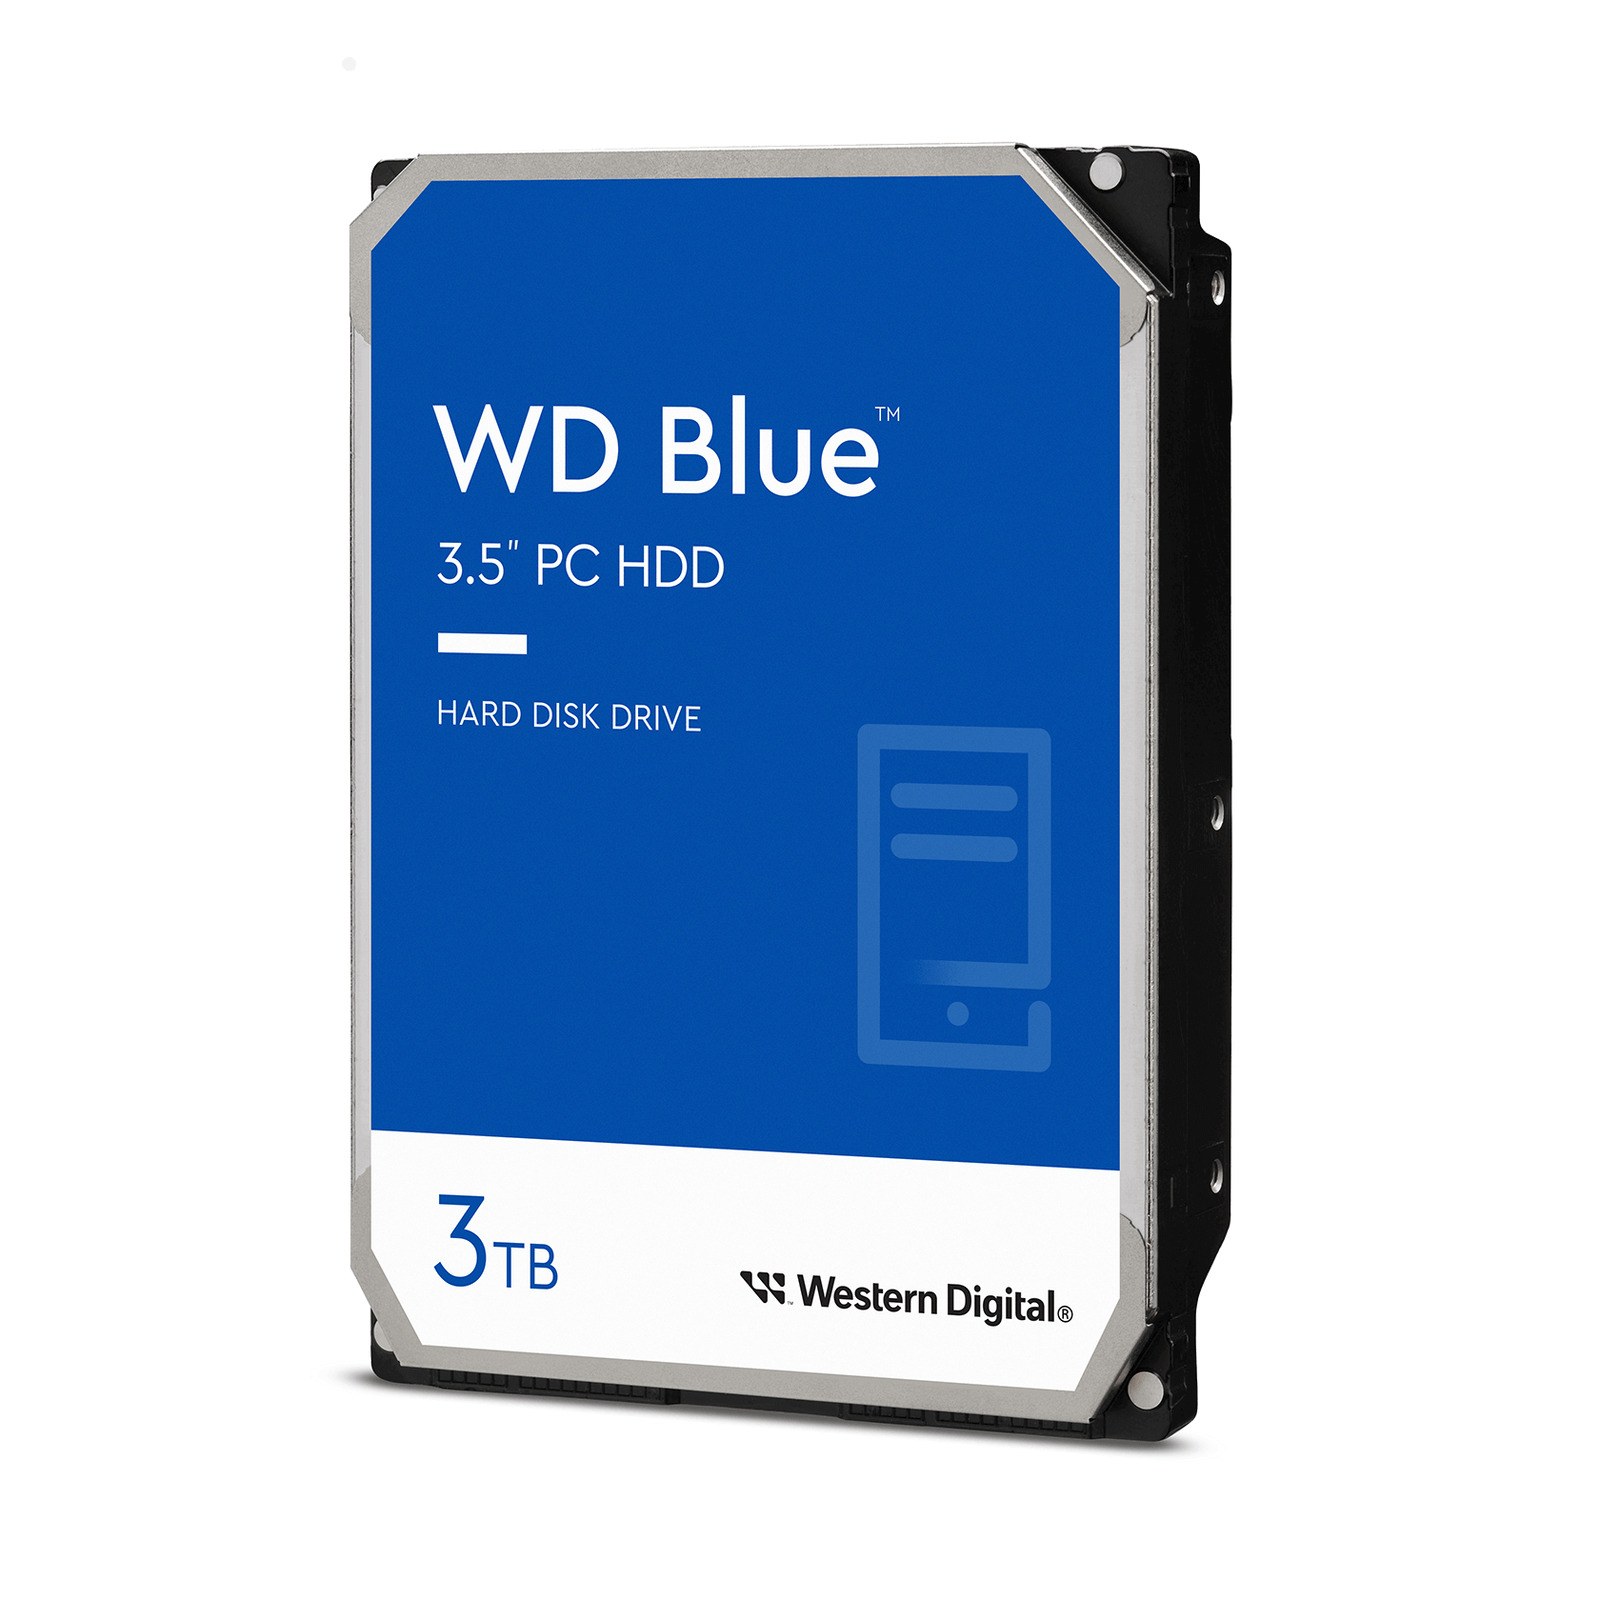 Western Digital 3TB WD Blue PC, Desktop Internal Hard Drive HDD - WD30EZAZ